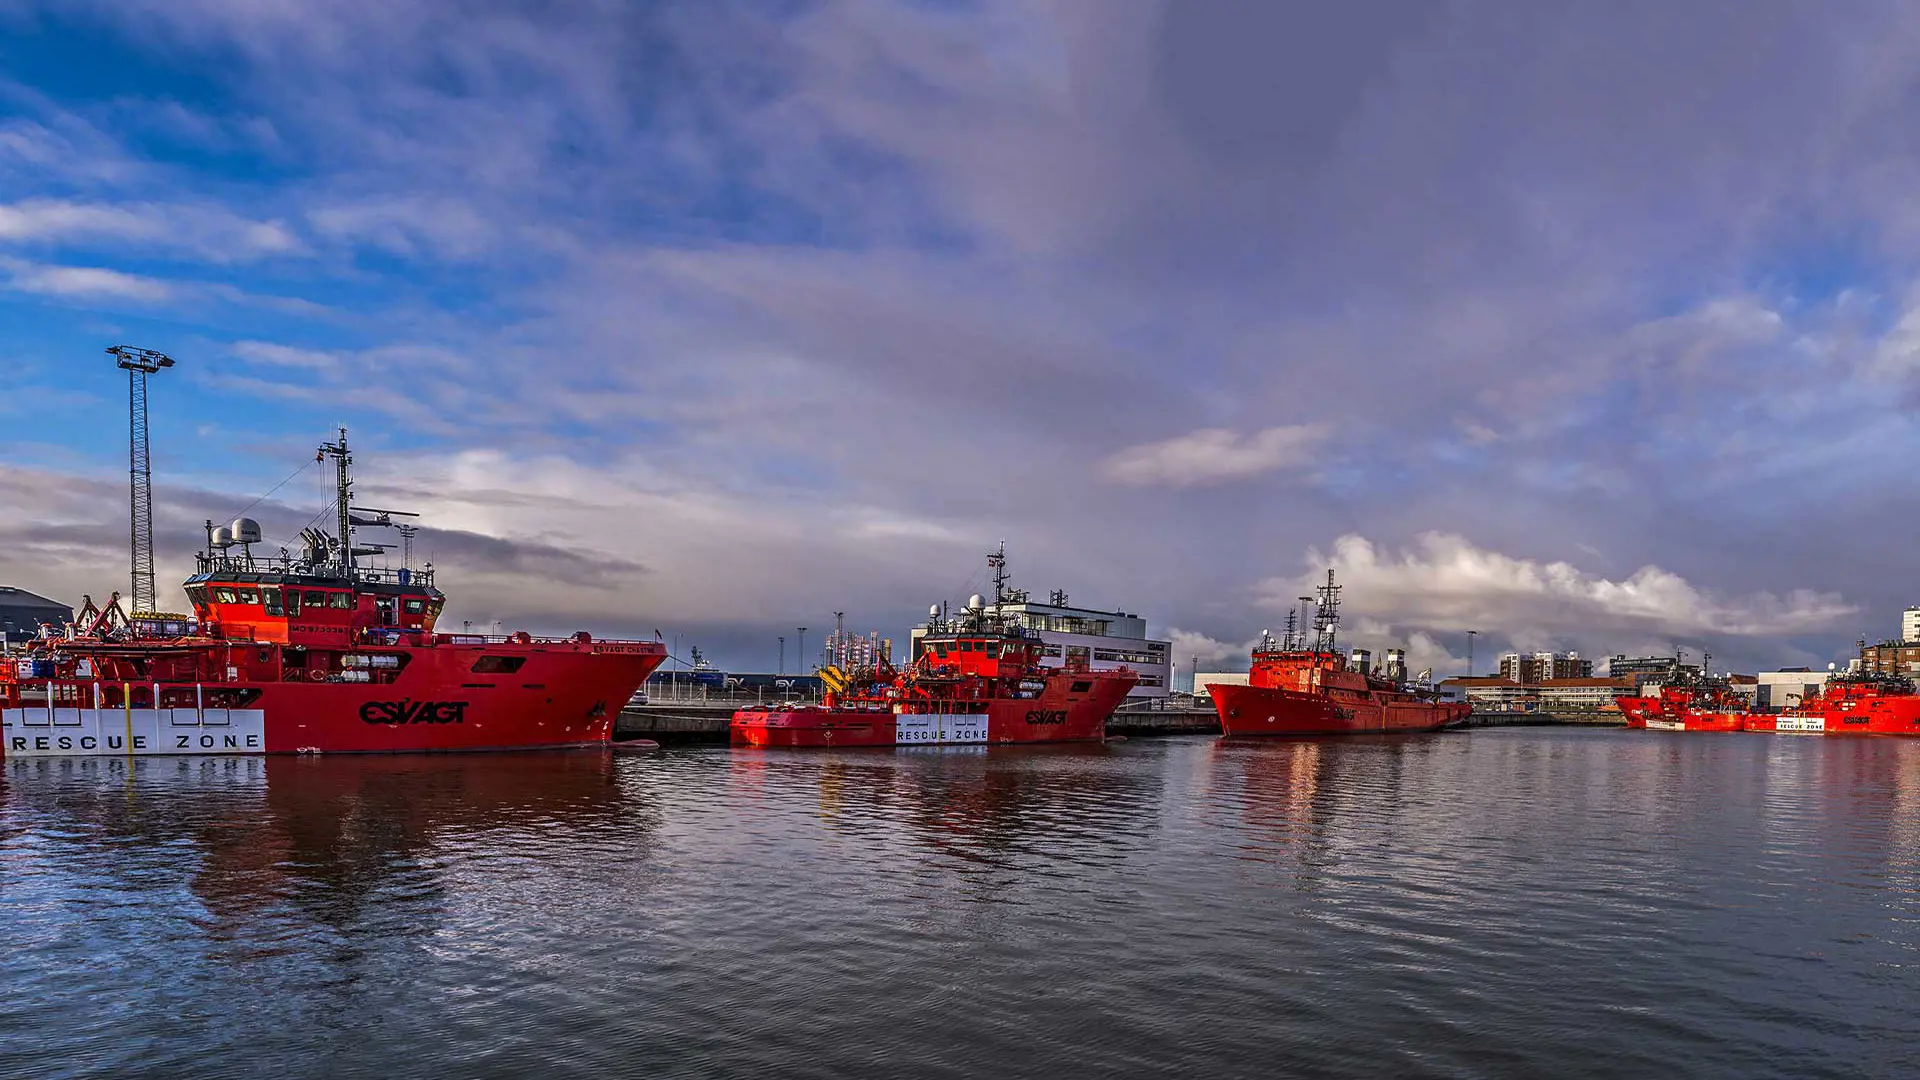 image og 5 red ships in the harbour of Esbjerg